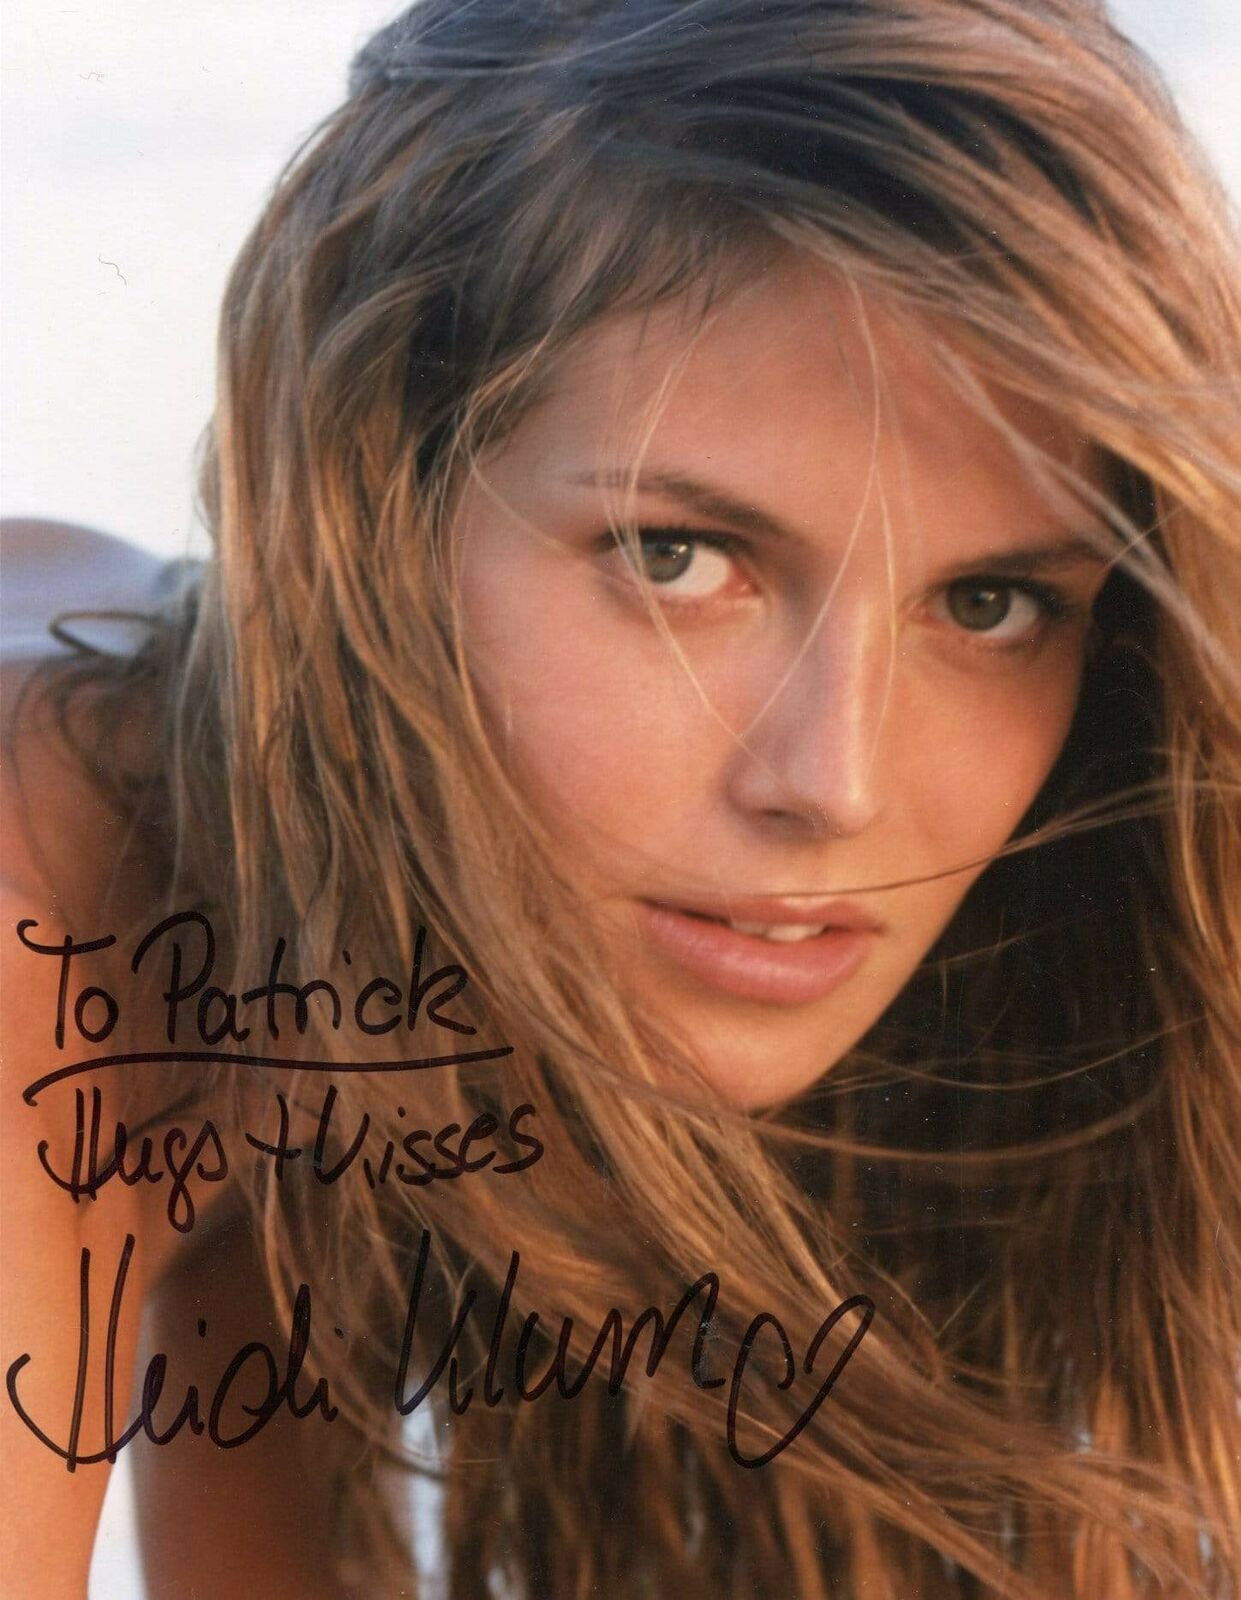 MODEL Heidi Klum AUTHENTIC autograph, signed Photo Poster painting